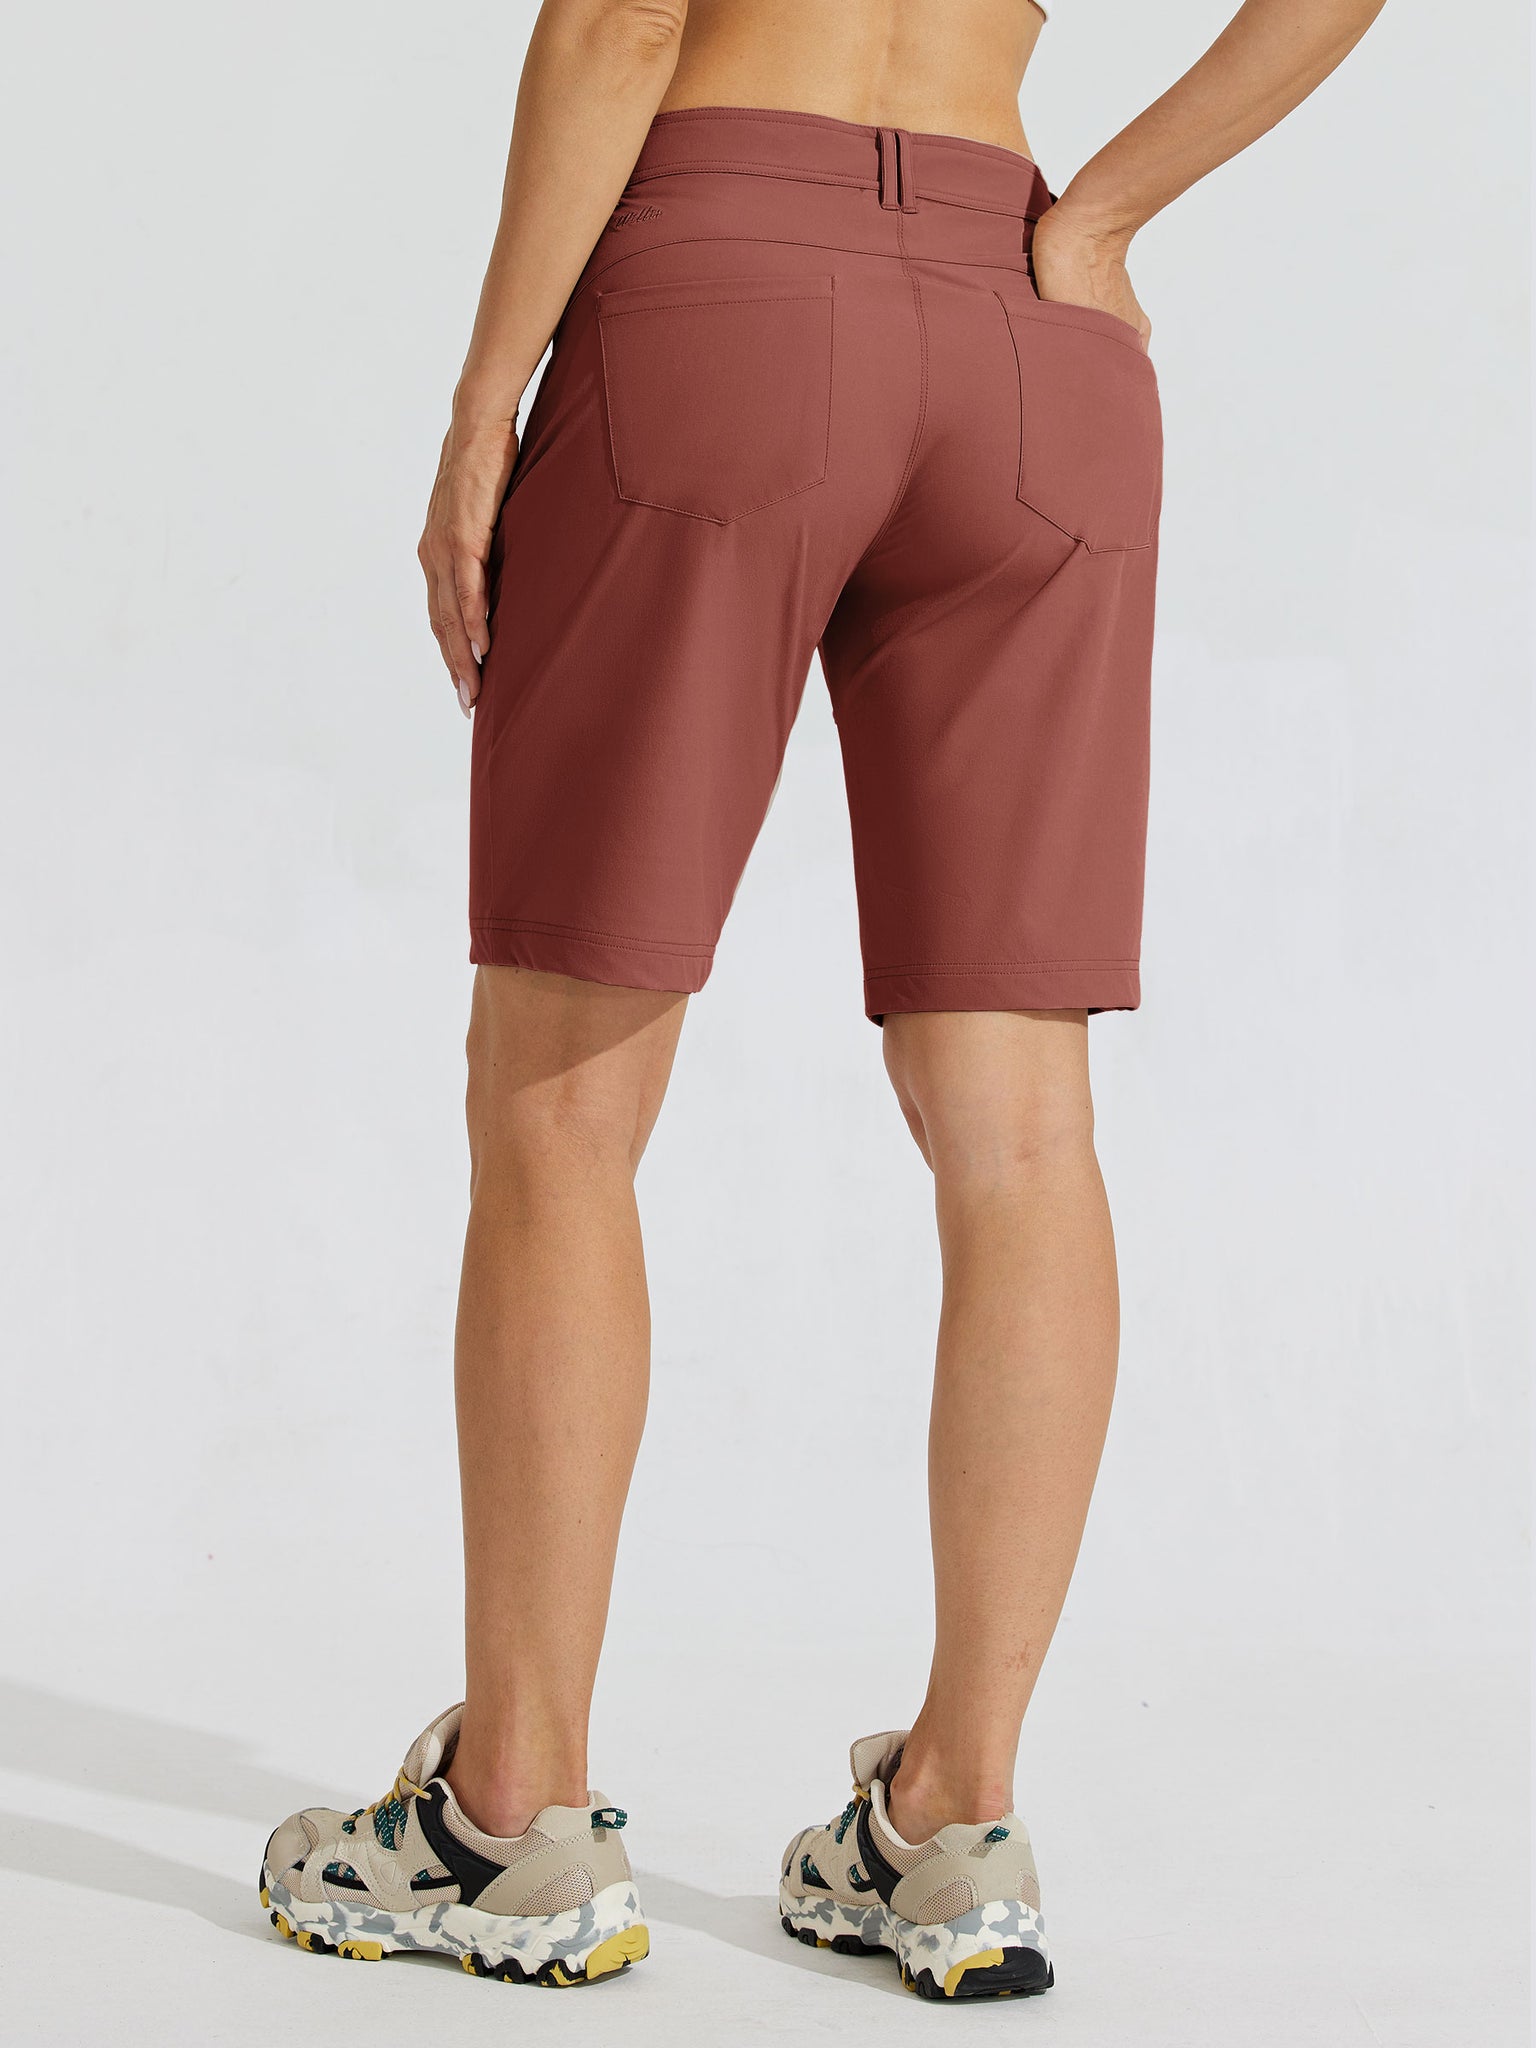 Women's Slim Leg Golf Shorts 10Inch_Cacao_model2